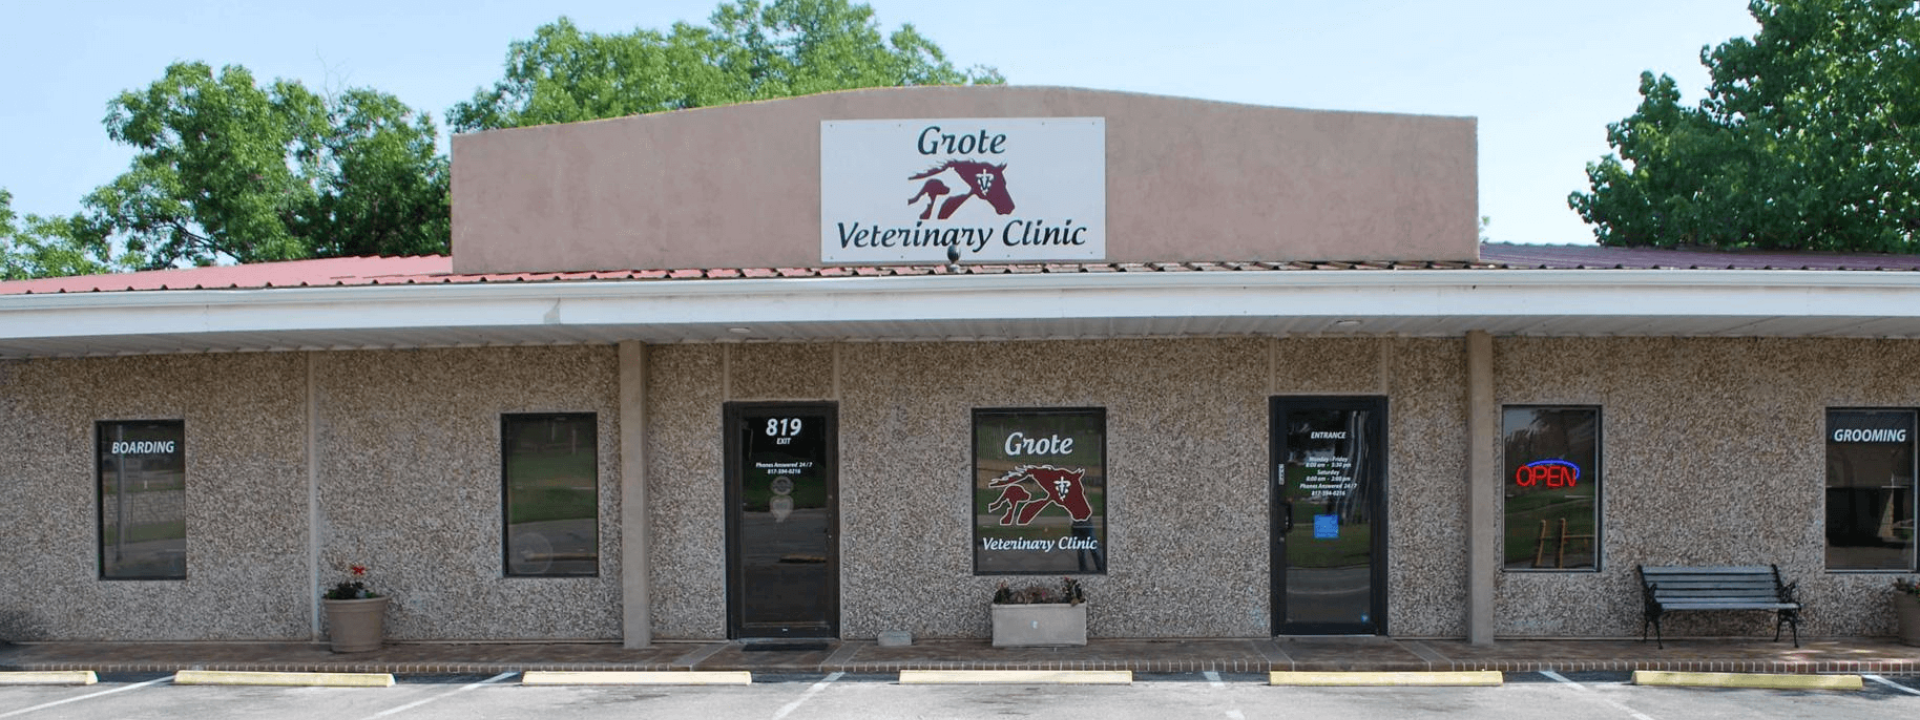 Grote Veterinary Clinic | Riverstone Veterinary Group